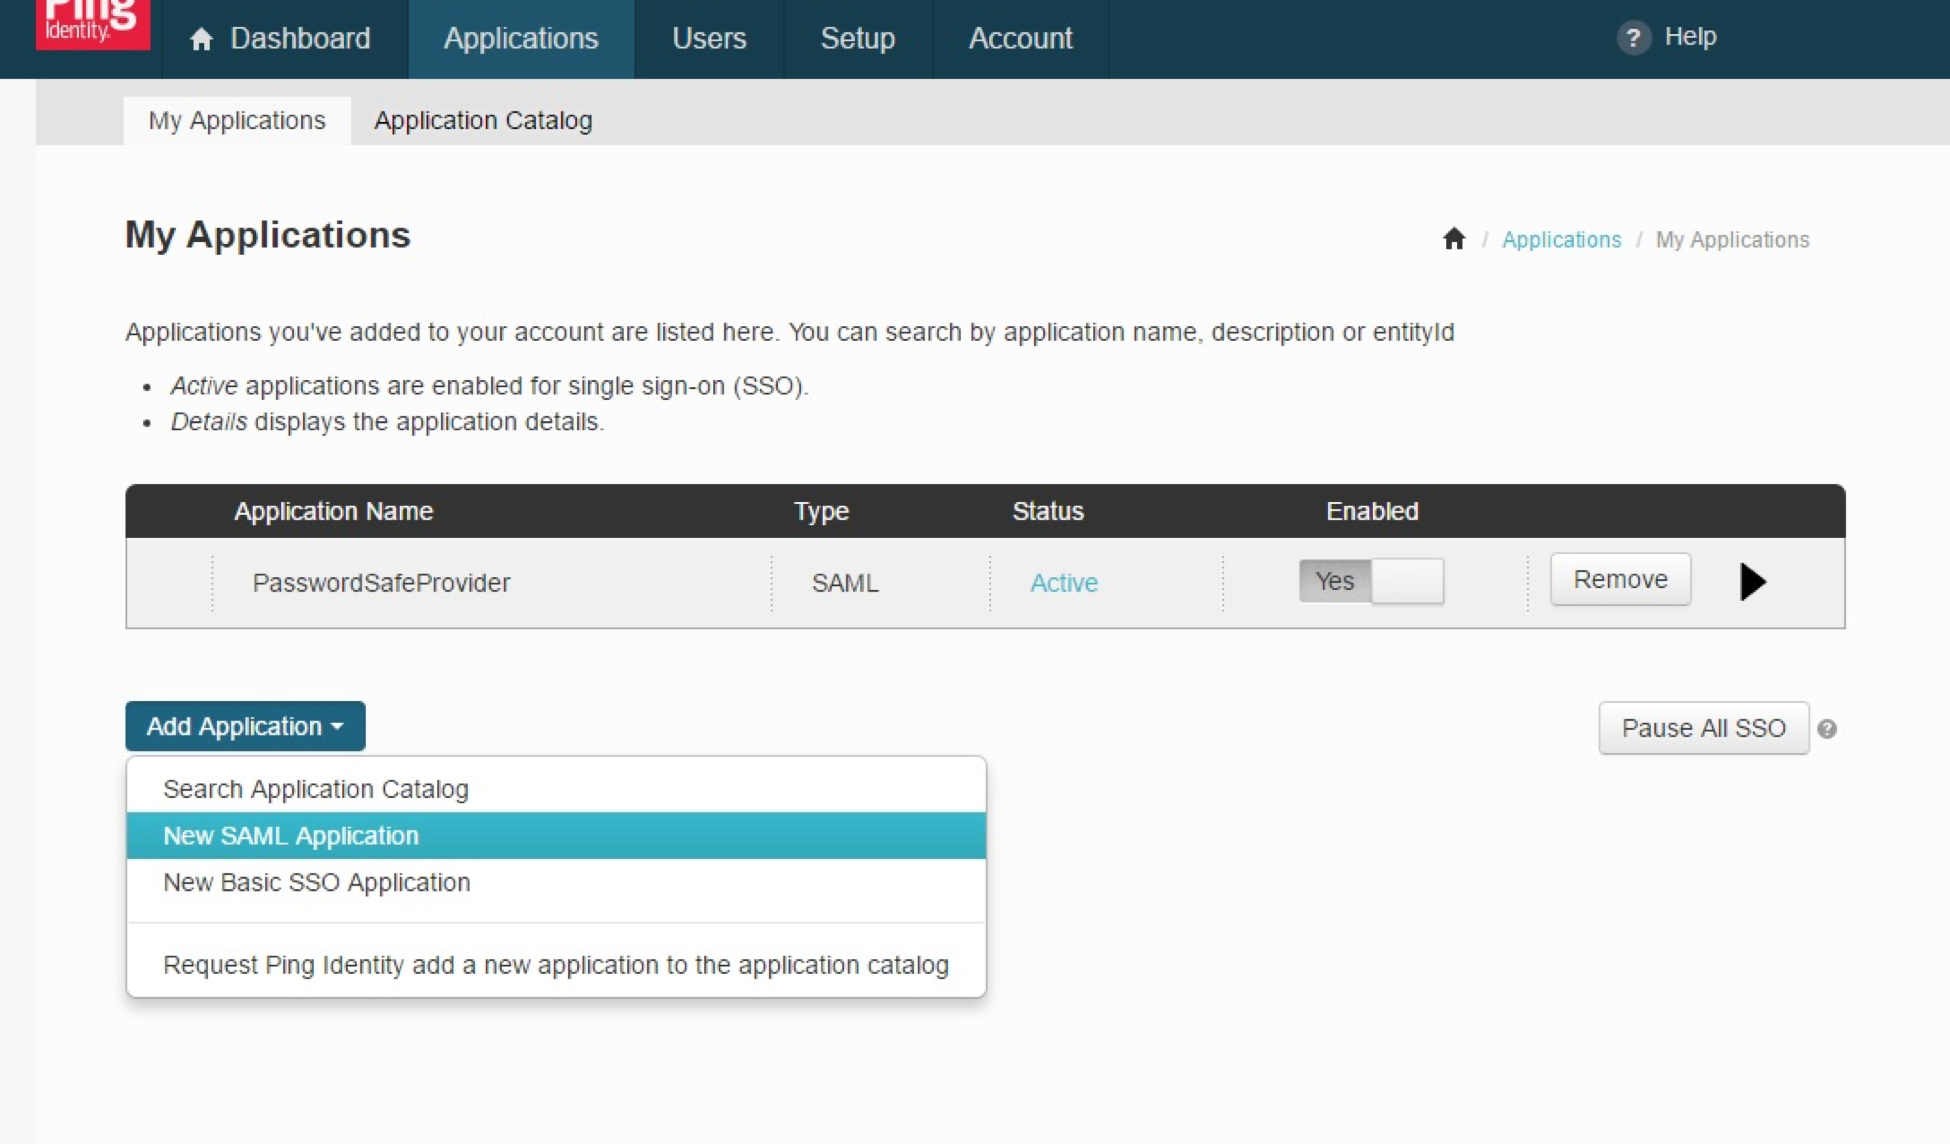 Screen Capture of Ping Identity New SAML Application Option